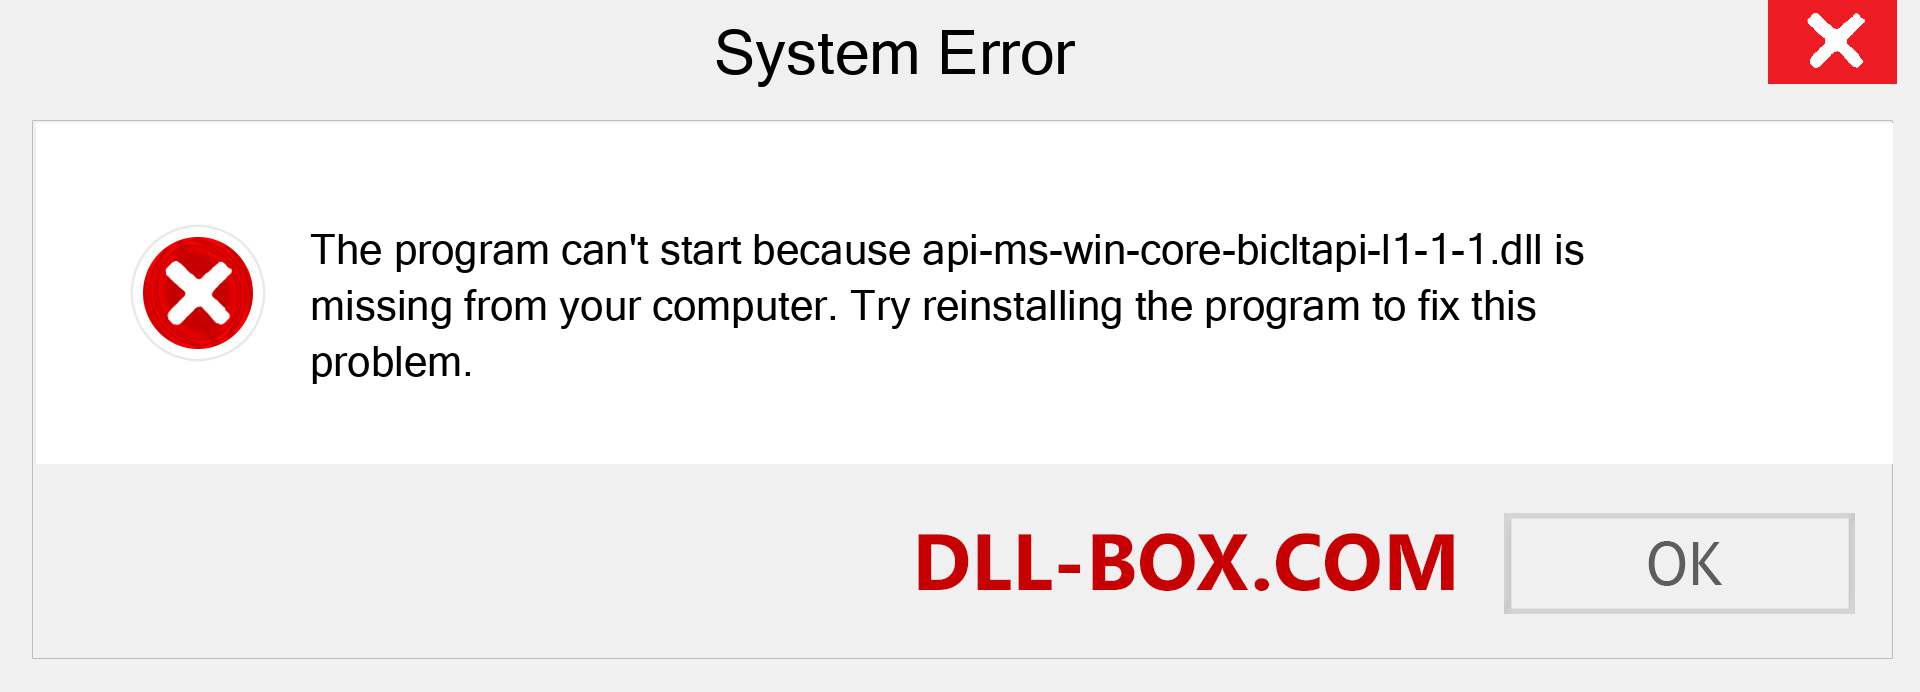  api-ms-win-core-bicltapi-l1-1-1.dll file is missing?. Download for Windows 7, 8, 10 - Fix  api-ms-win-core-bicltapi-l1-1-1 dll Missing Error on Windows, photos, images